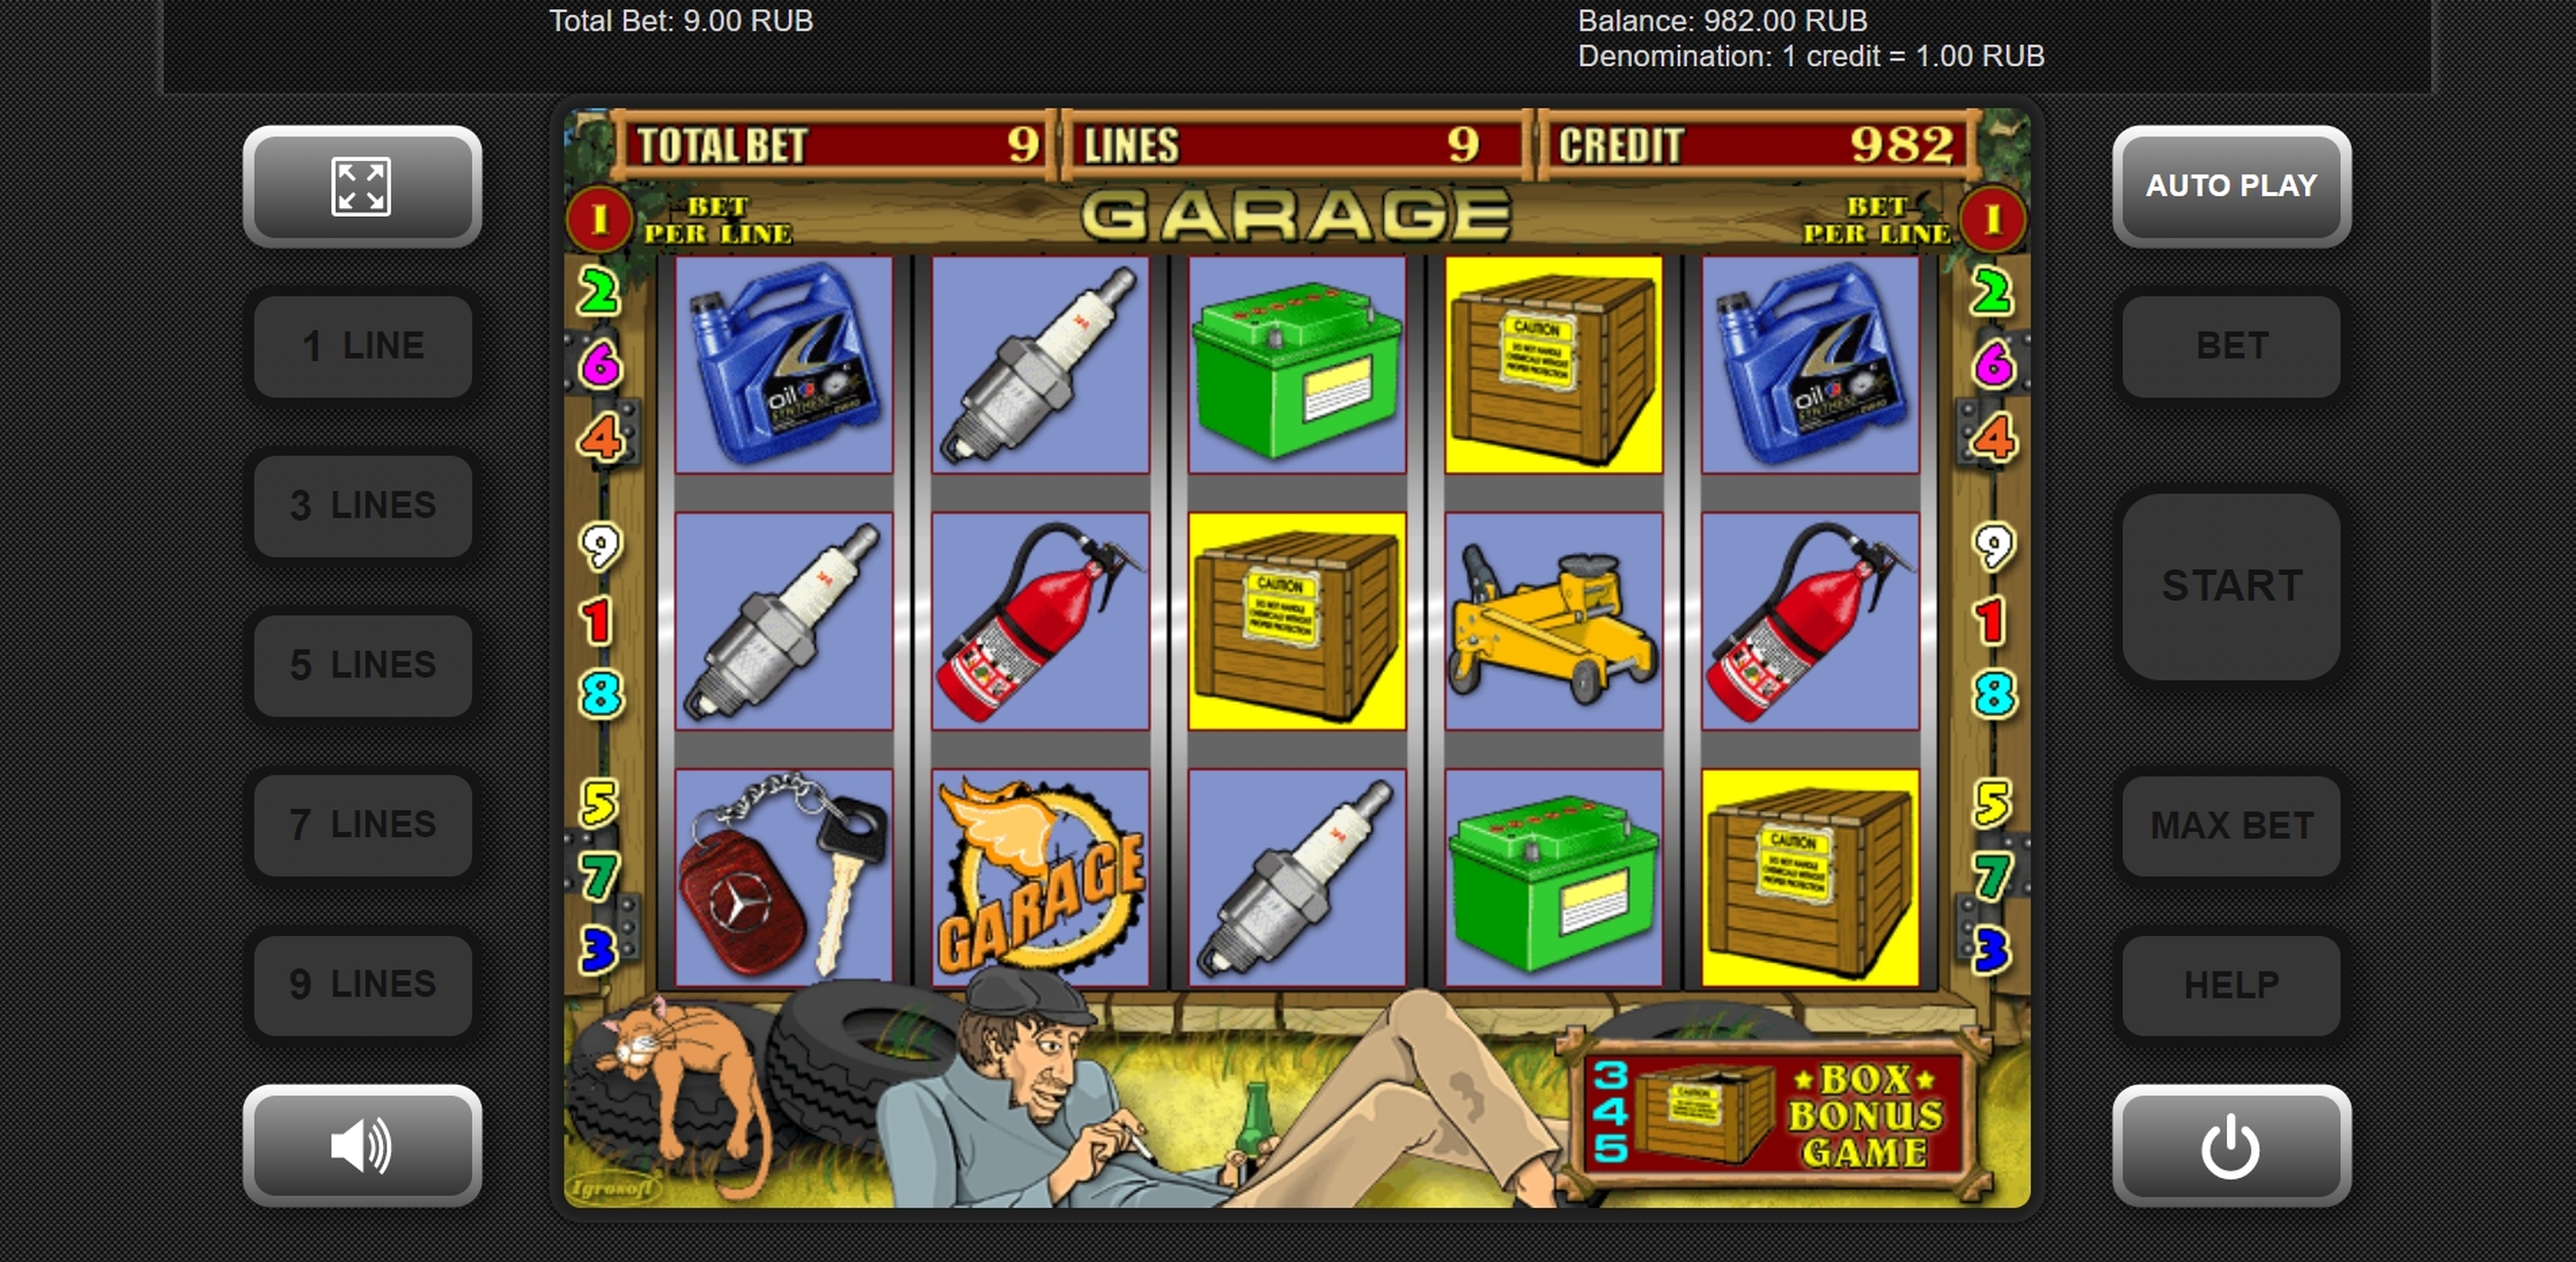 Win Money in Garage Free Slot Game by Igrosoft